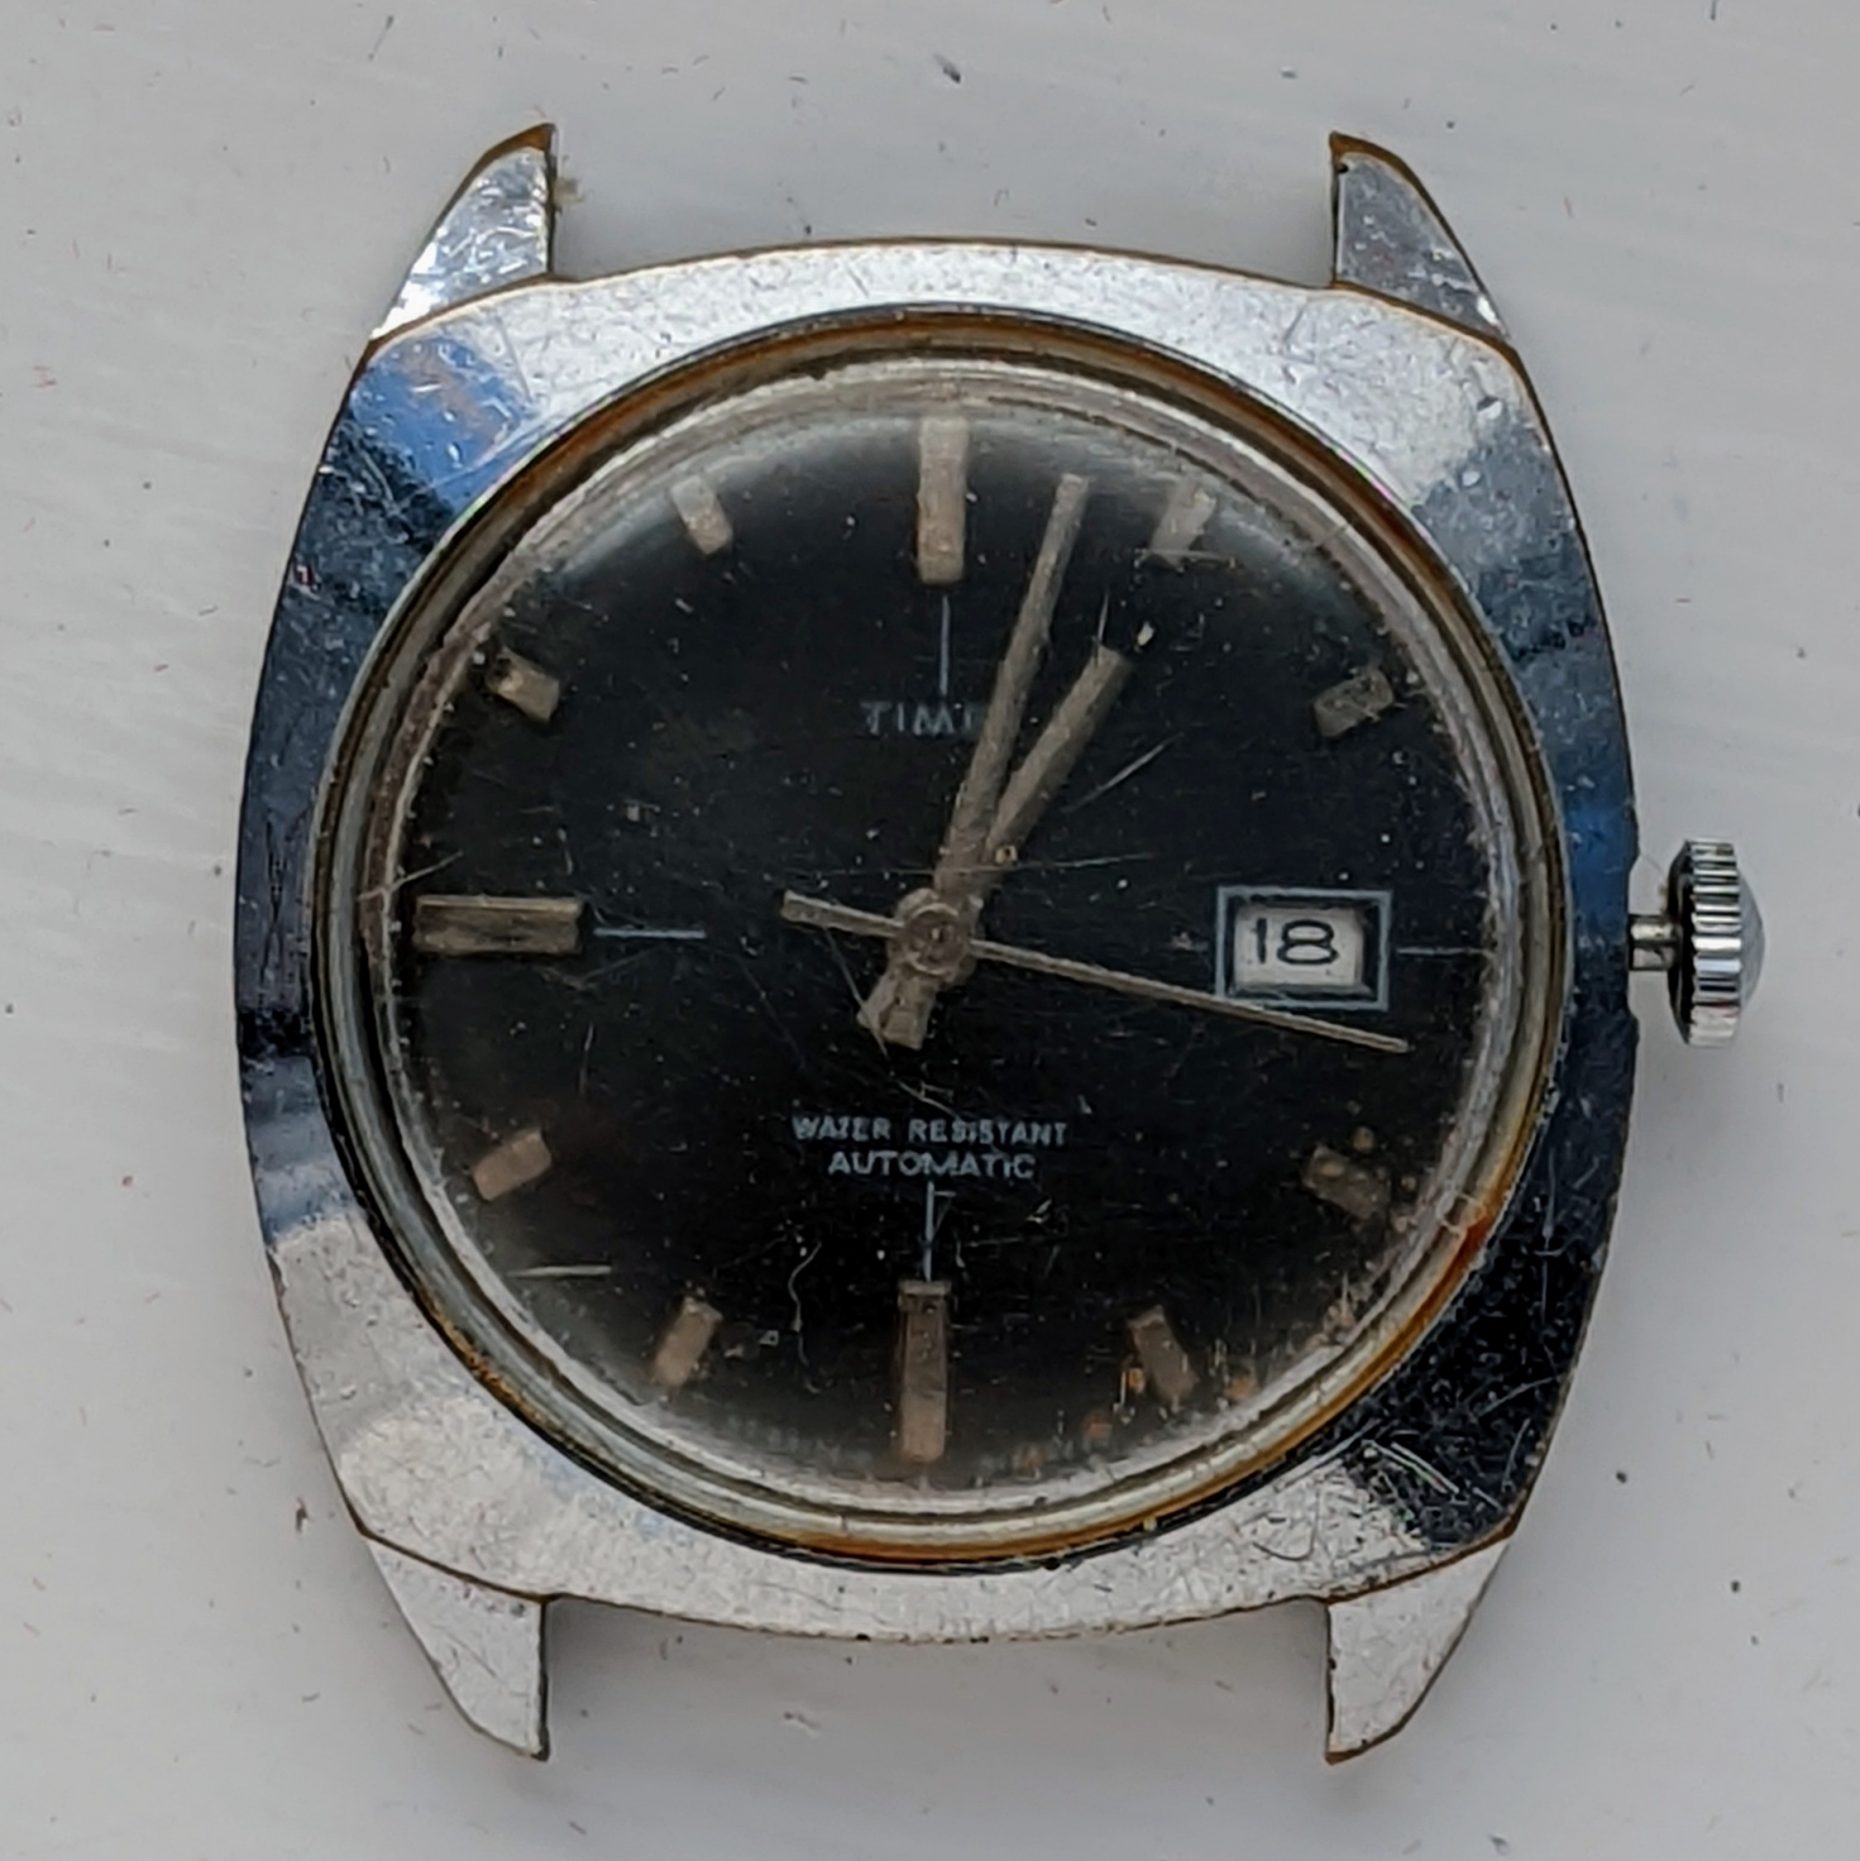 Timex Viscount 4138 3270 [1970]